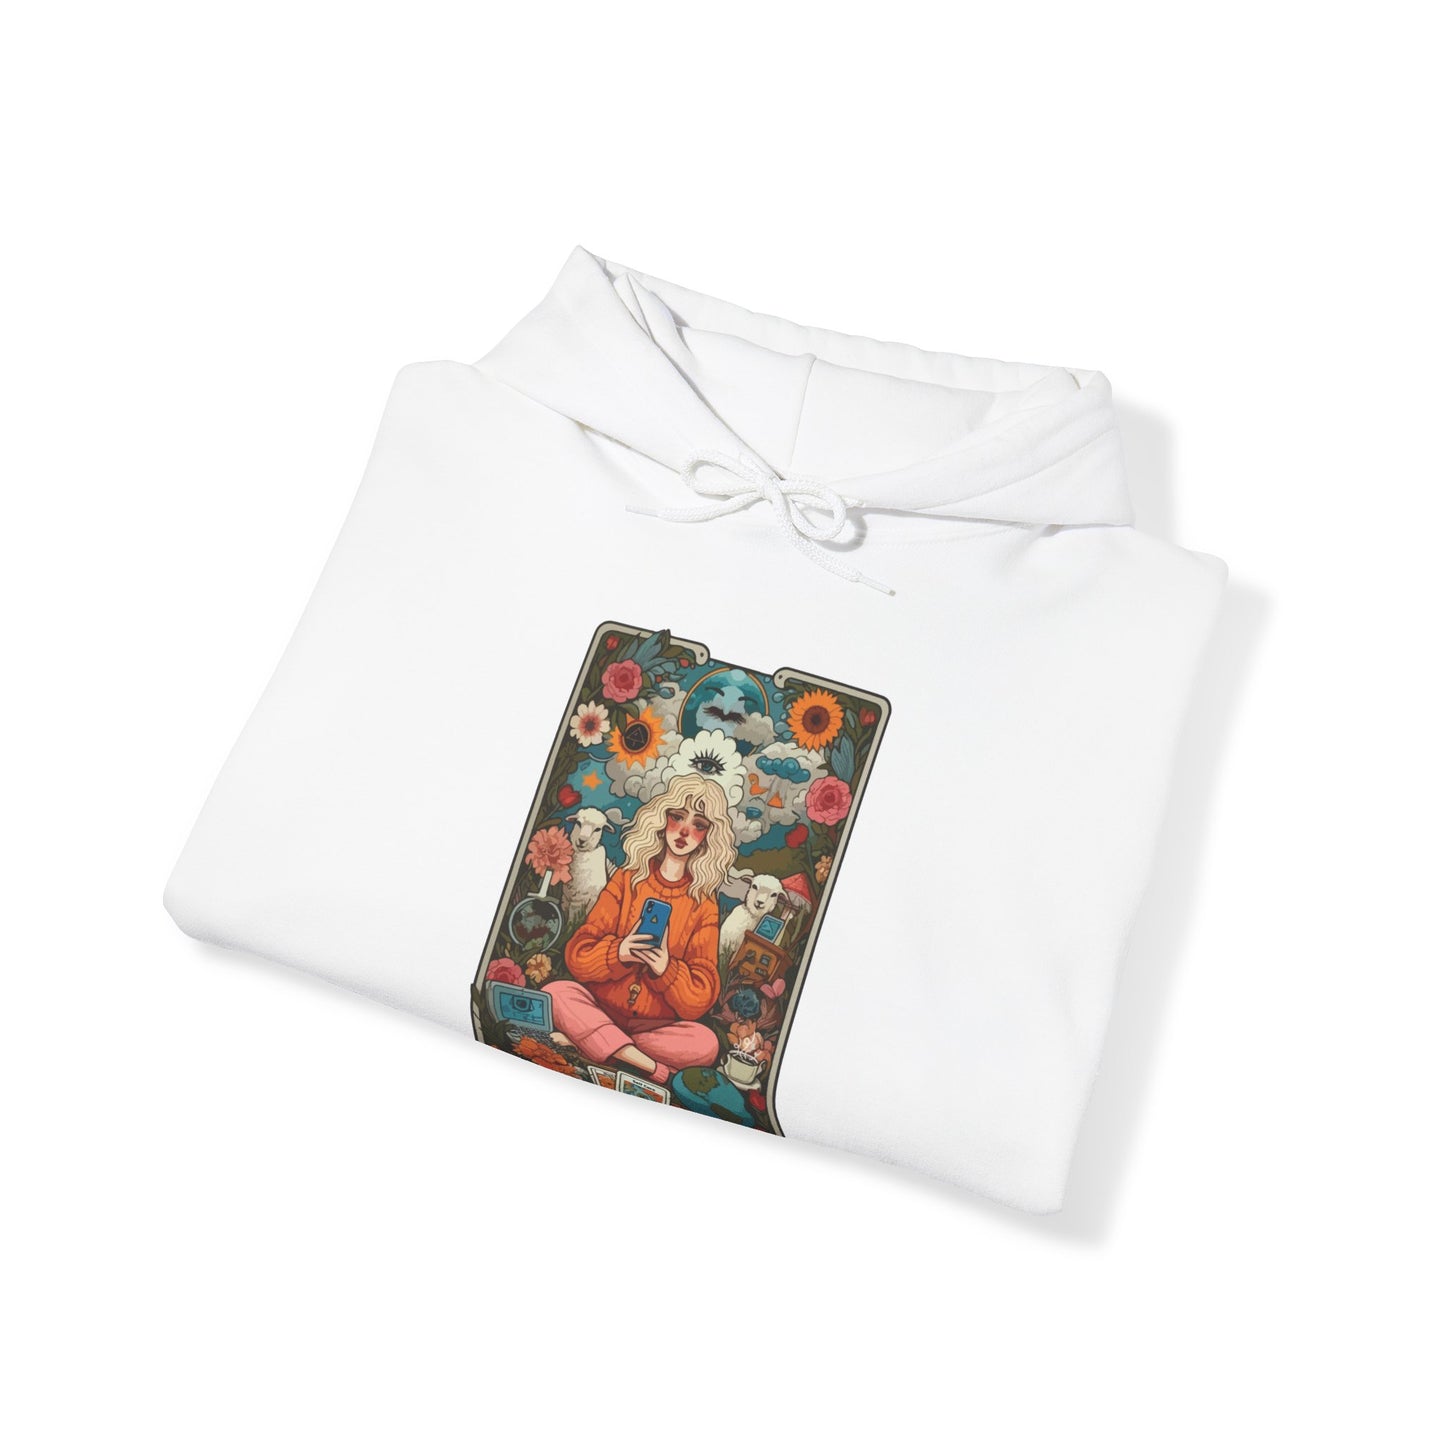 Narc In Sheep’s Clothing Tarot Card Heavy Blend™ Hooded Sweatshirt